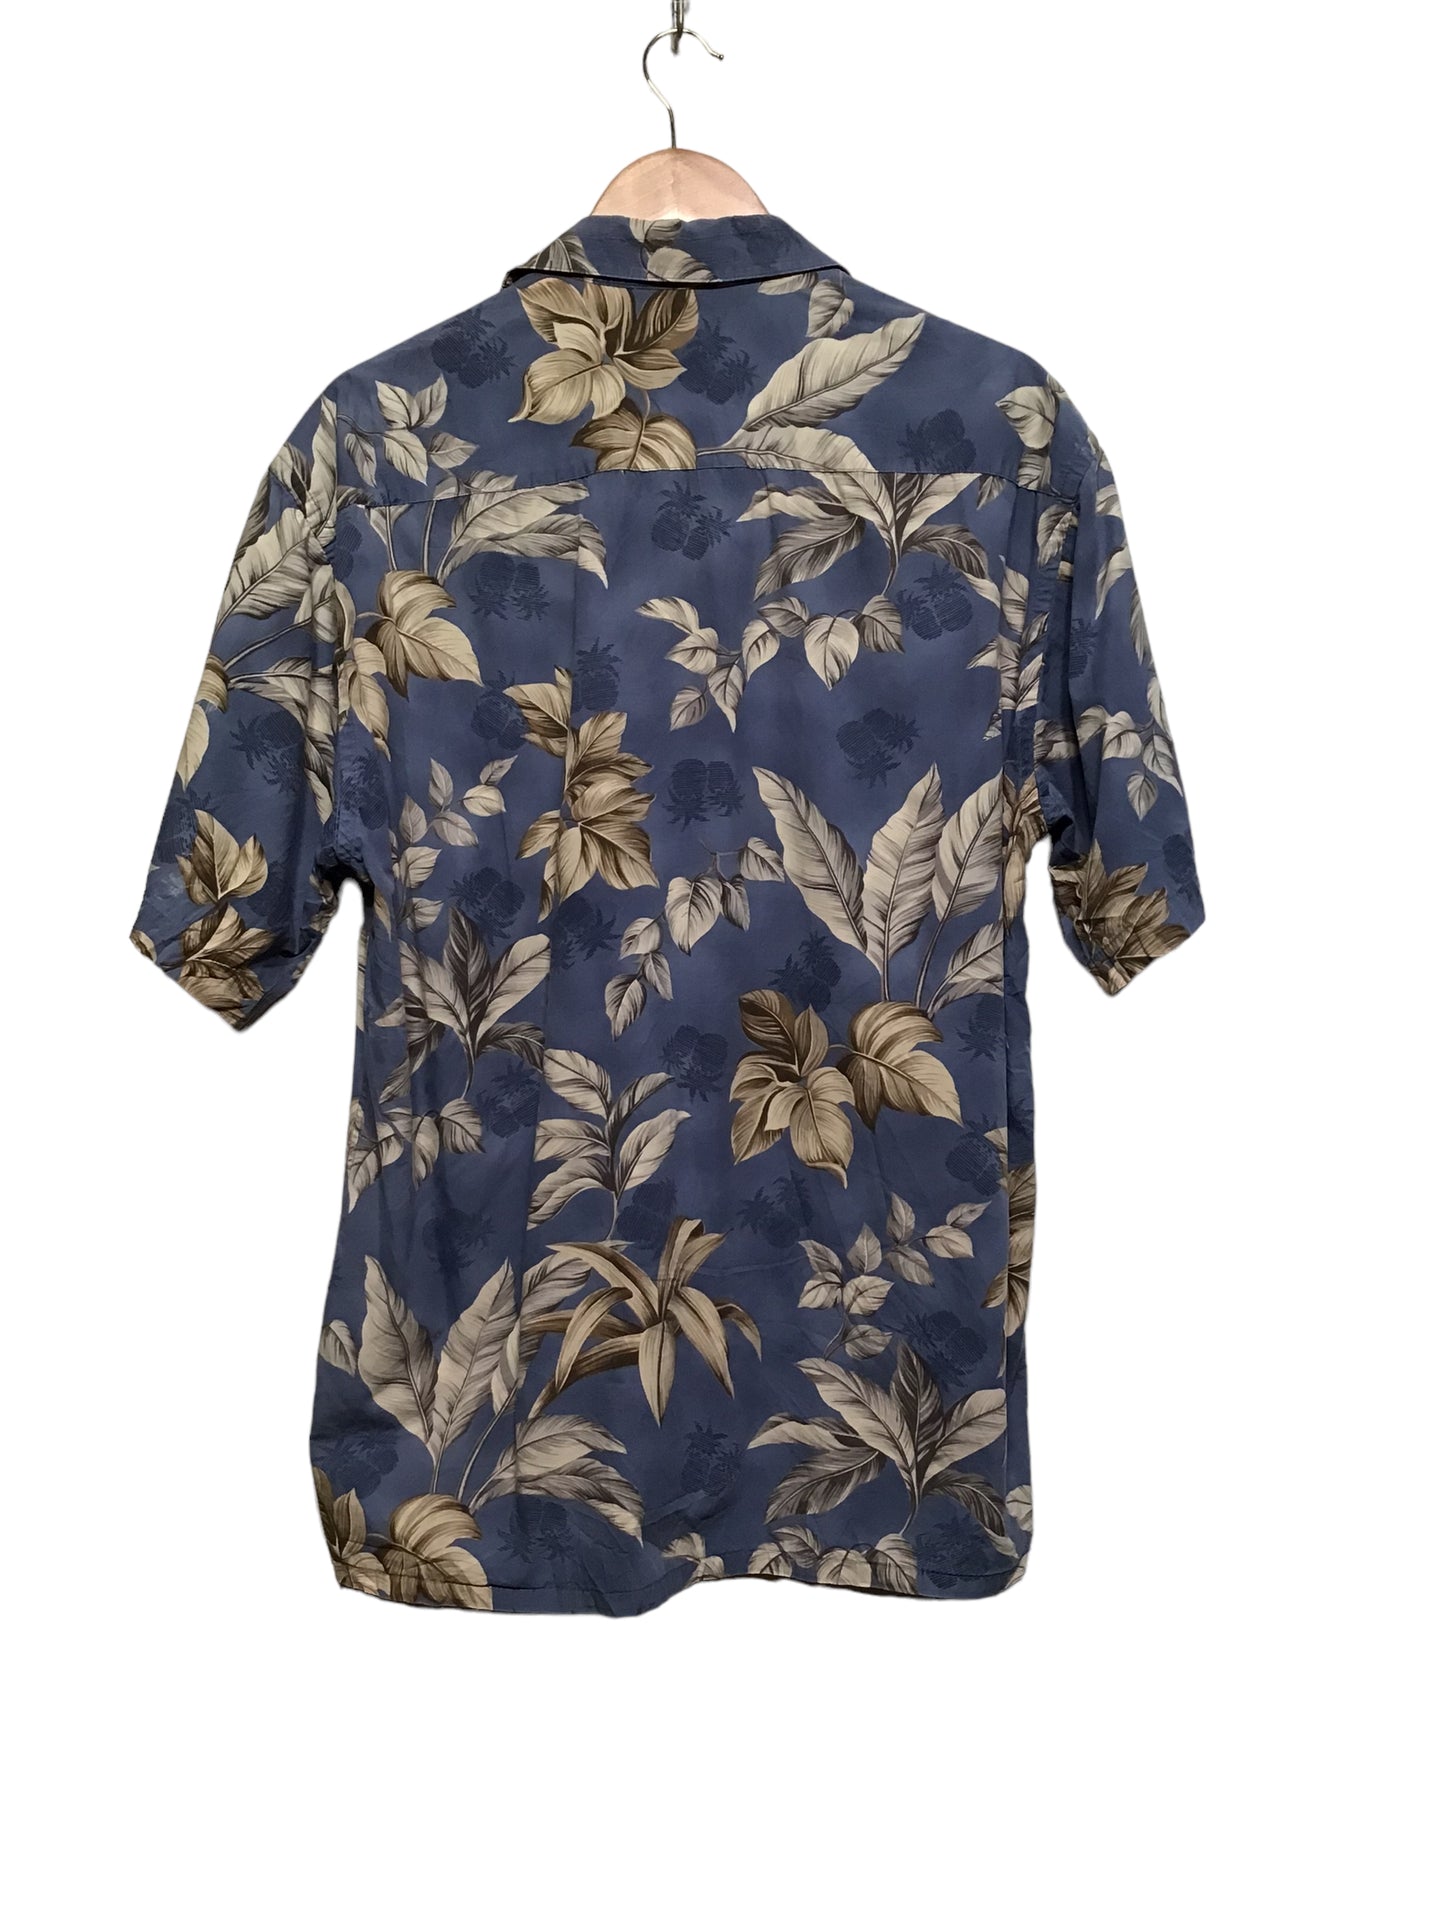 Pierre Cardin Shirt (Size L)